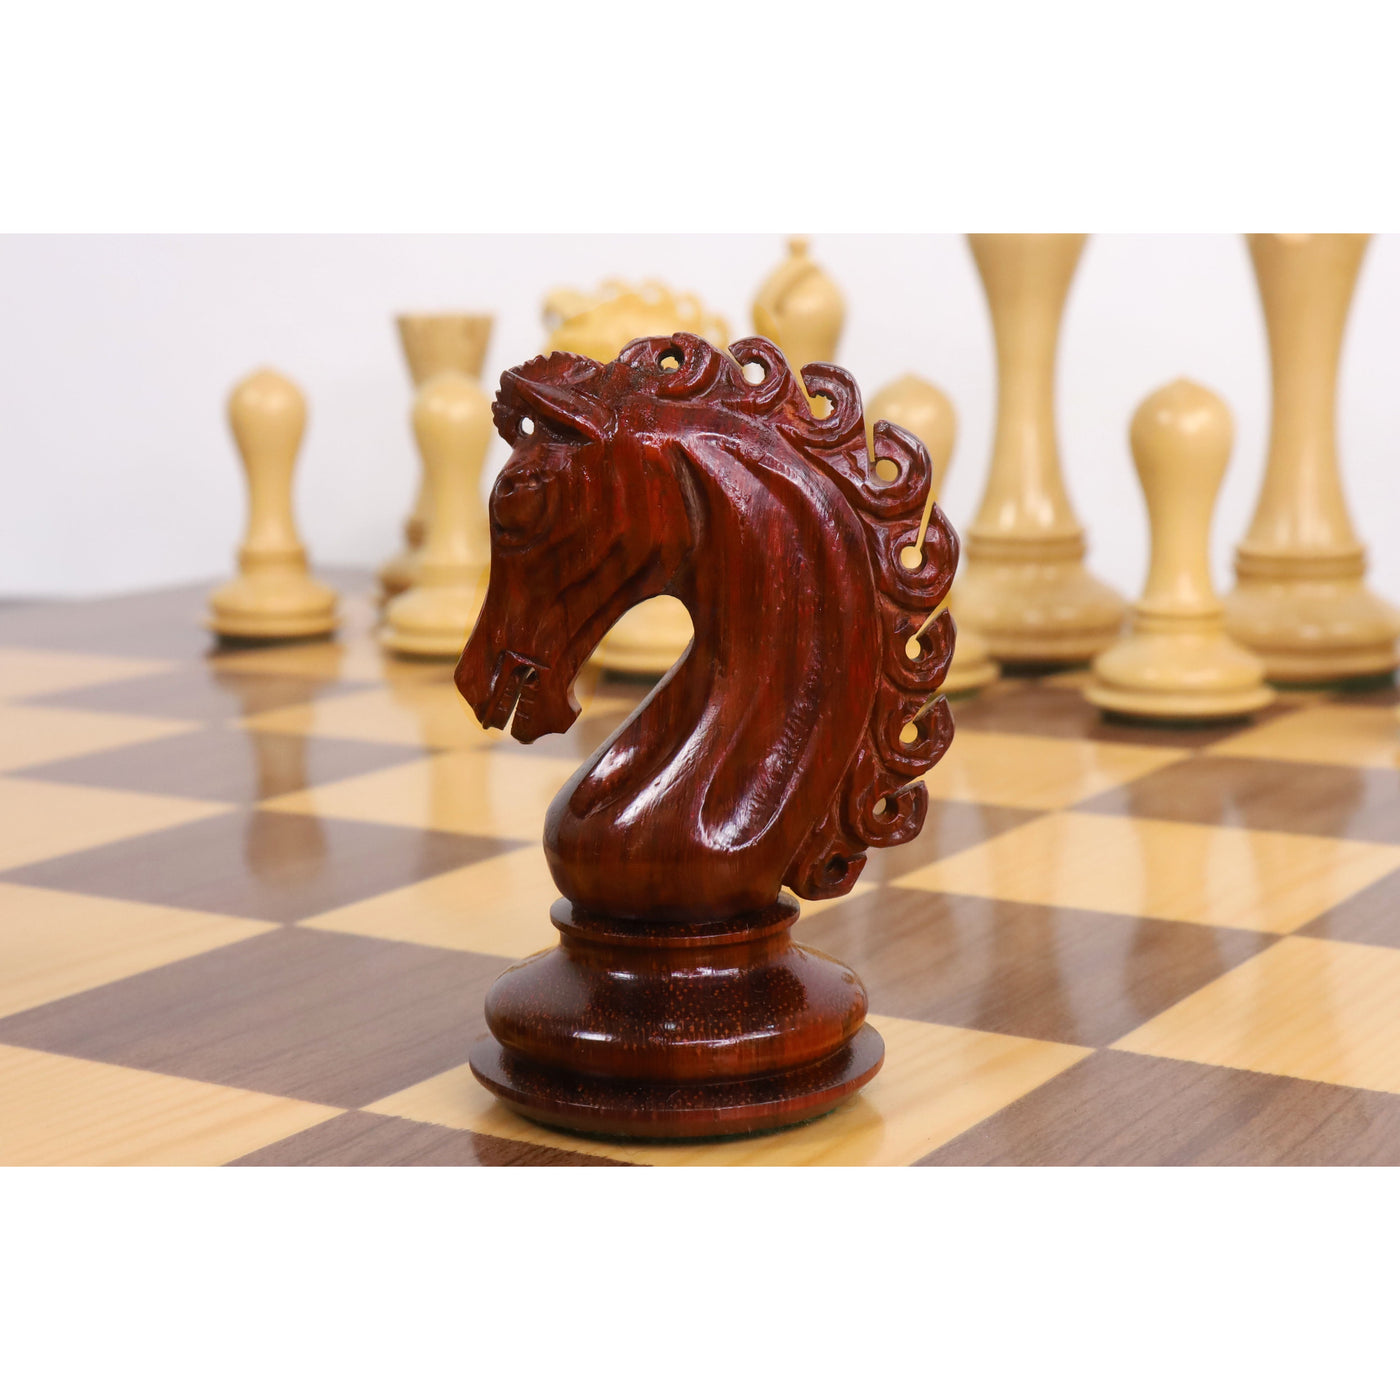 4.6" Avant Garde Luxury Staunton Chess Set - Chess Pieces Only - Bud Rosewood & Boxwood